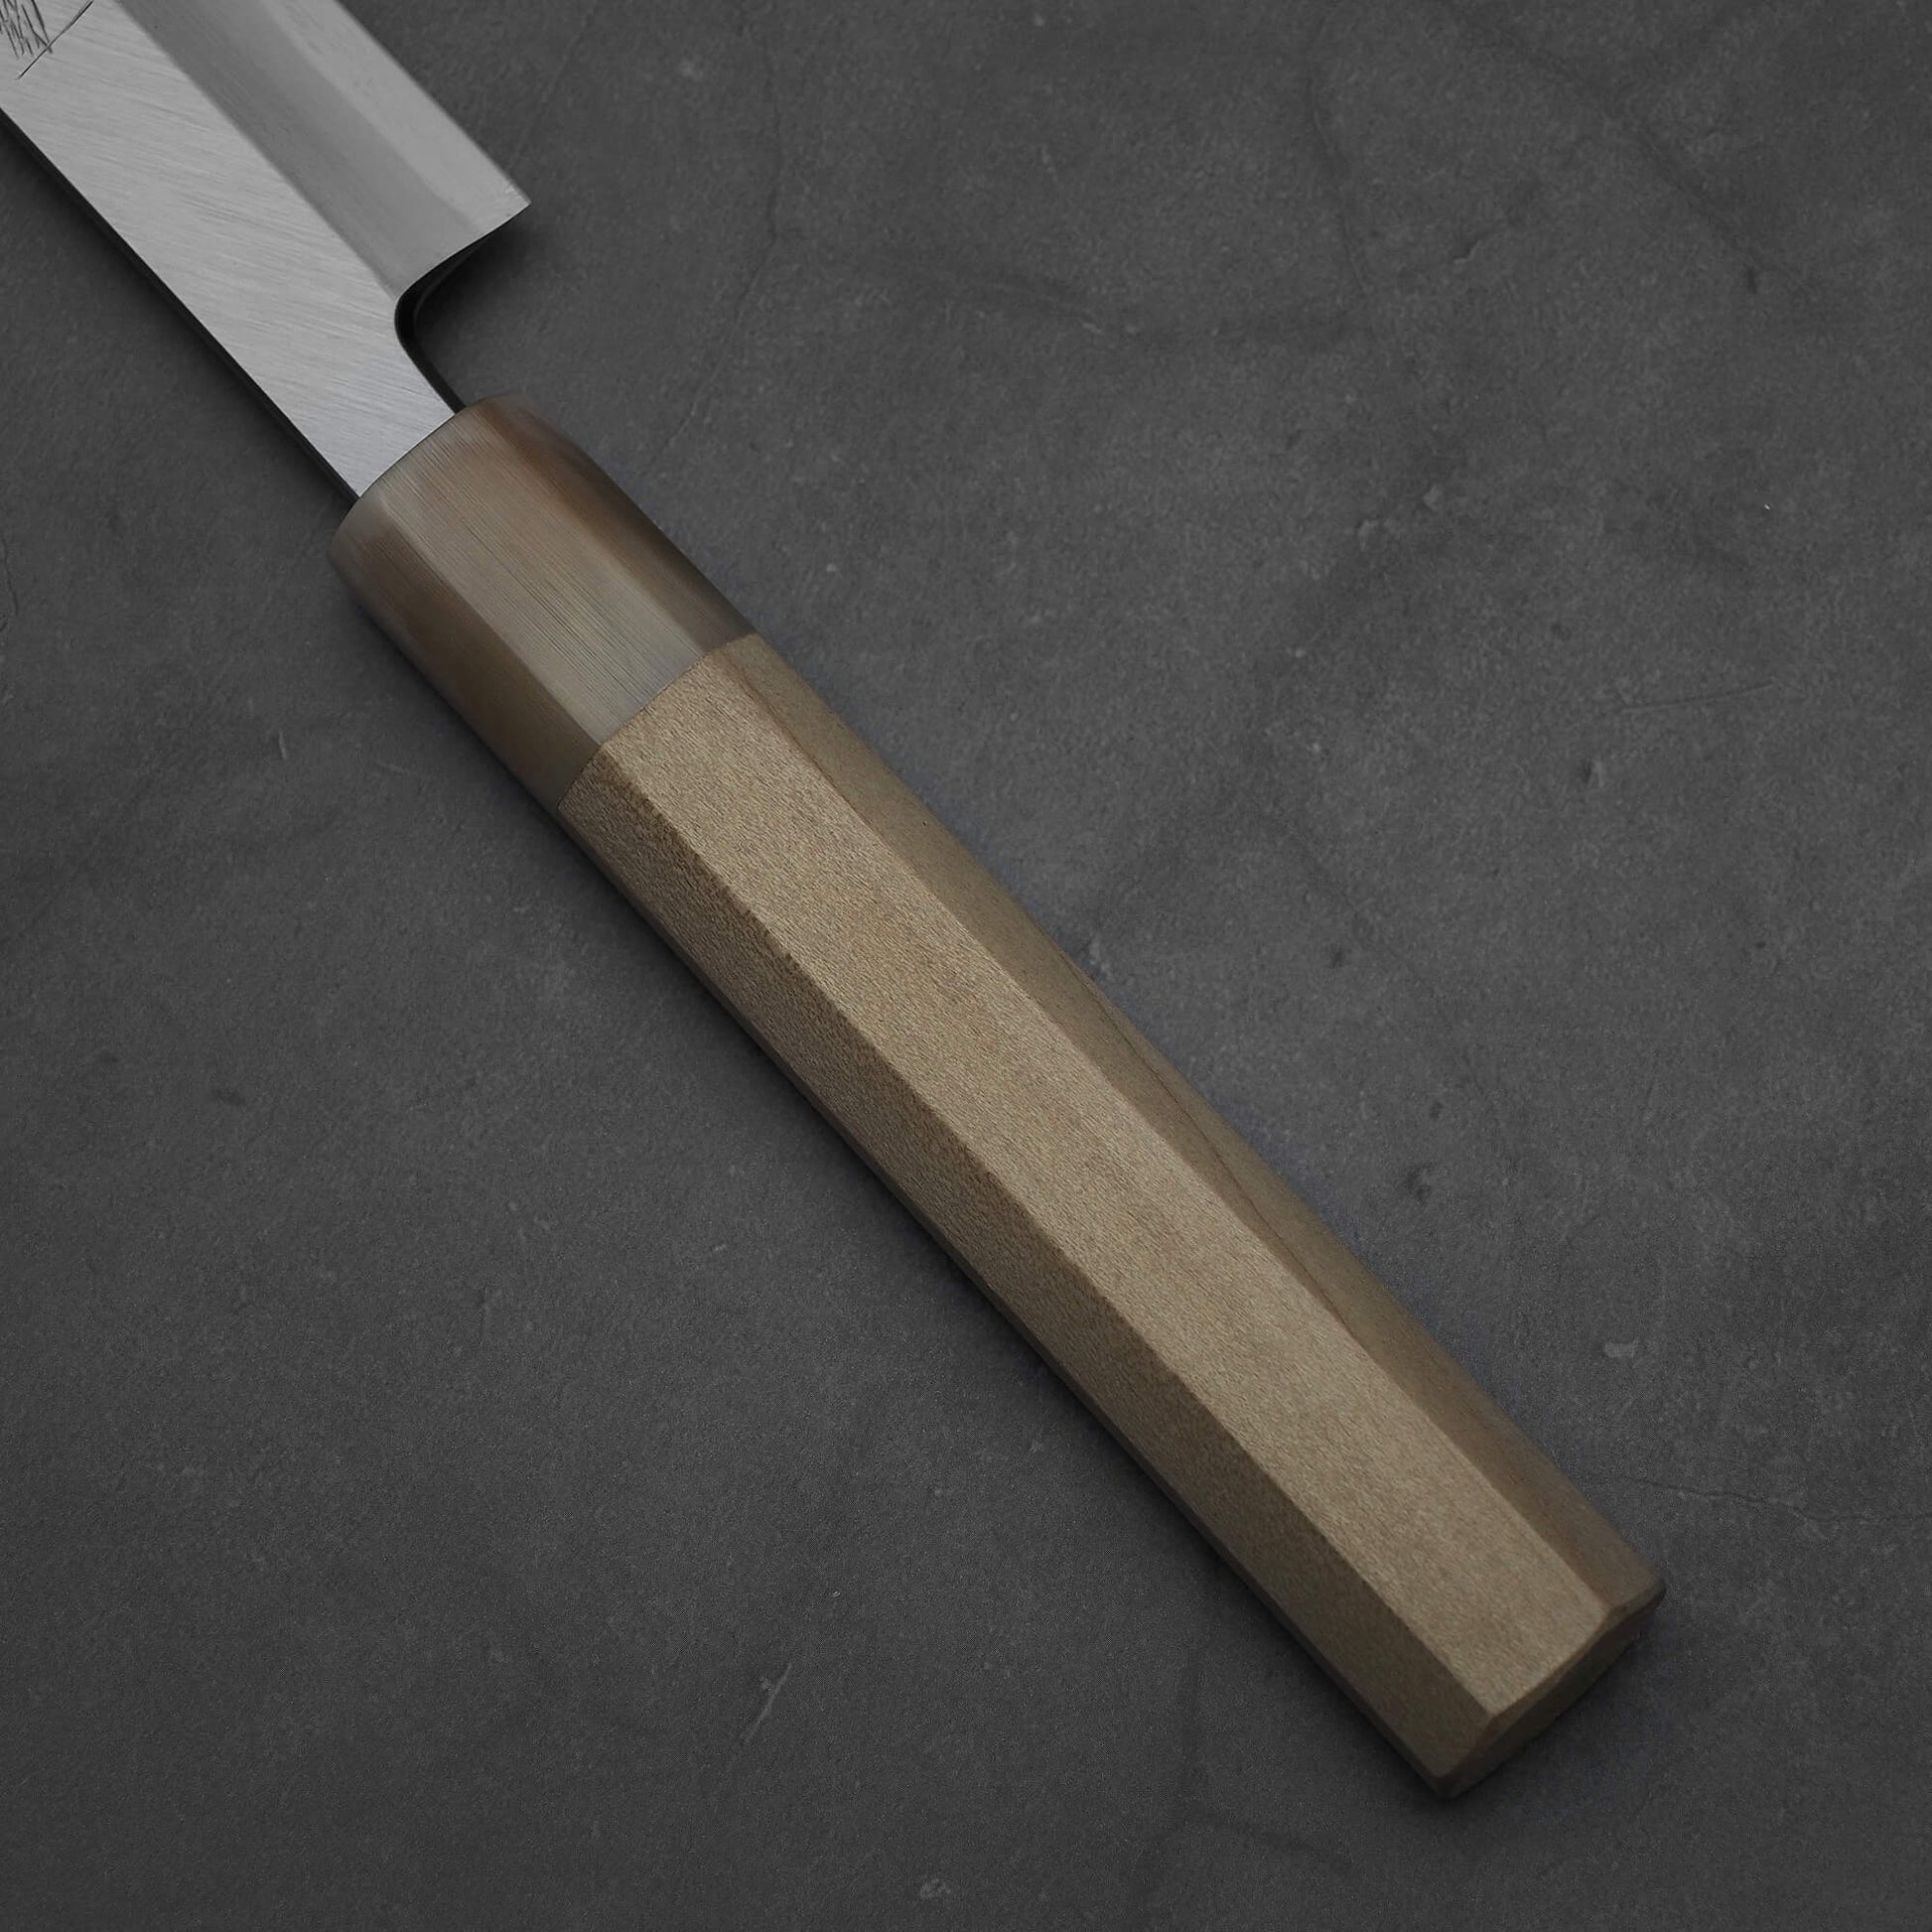 Close up view of Yoshikazu Tanaka 300mm sakimaru takohiki knife with a hand-forged blade made of shirogami#2 steel.